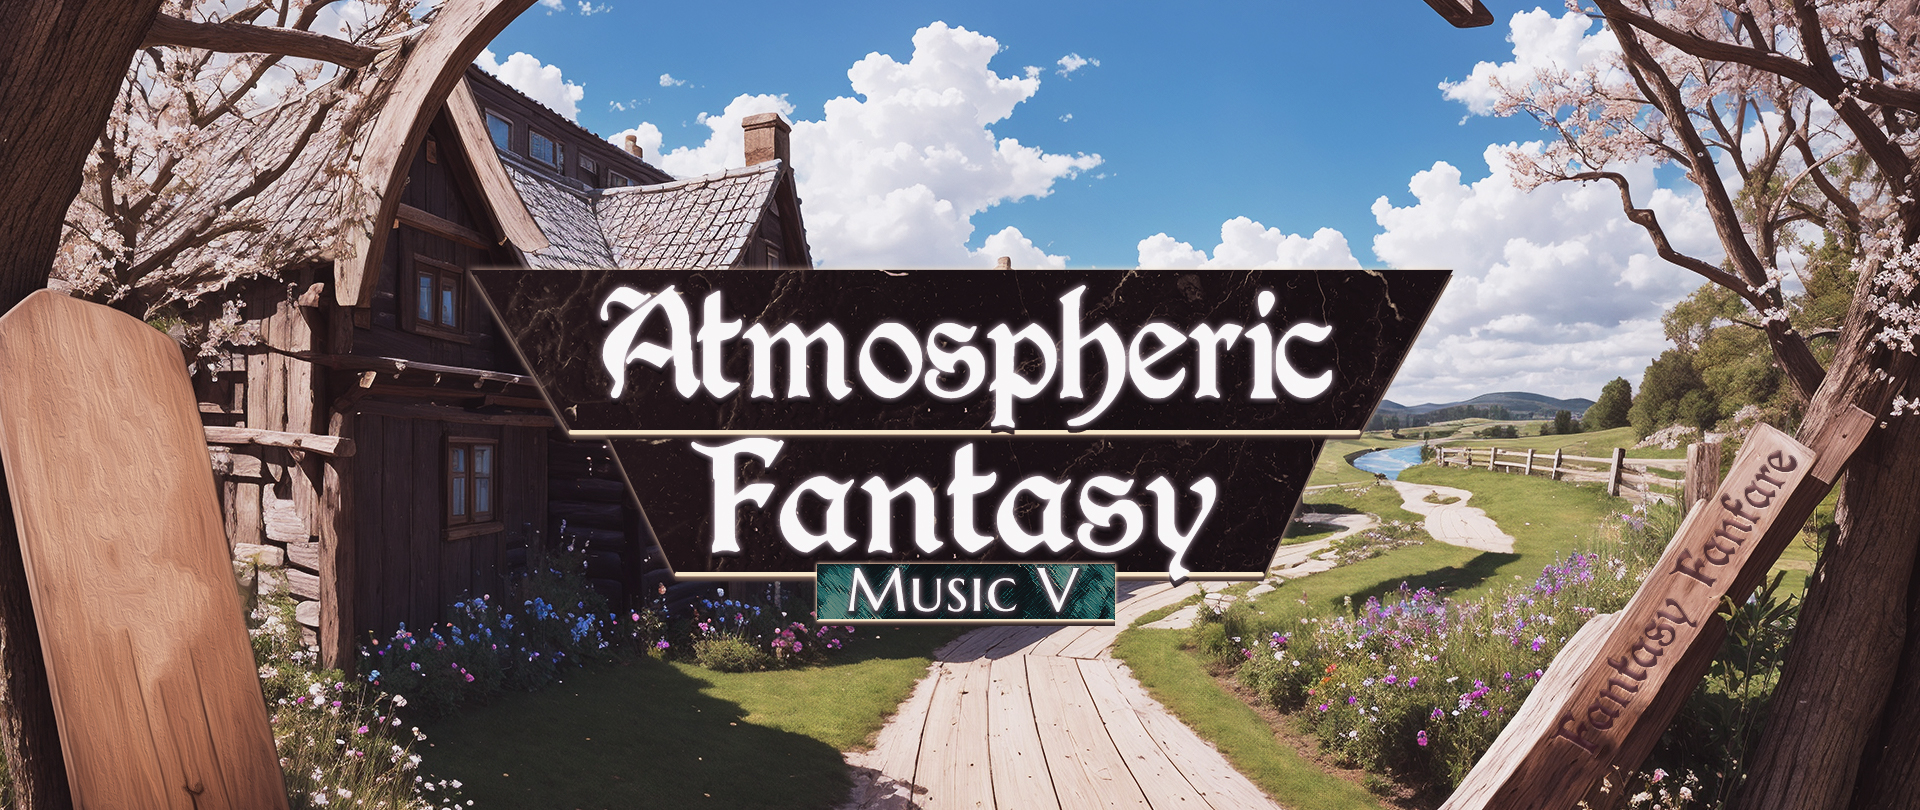 Atmospheric Fantasy Music 5